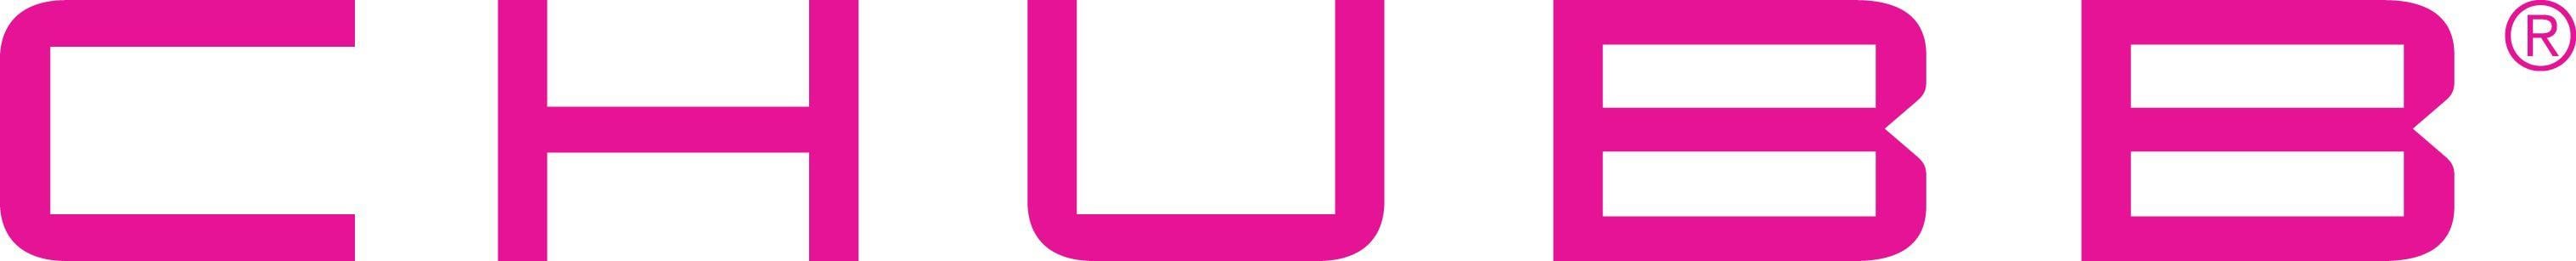 Chubb Logo - Chubb UK/Regional Newsroom - Chubb Logos